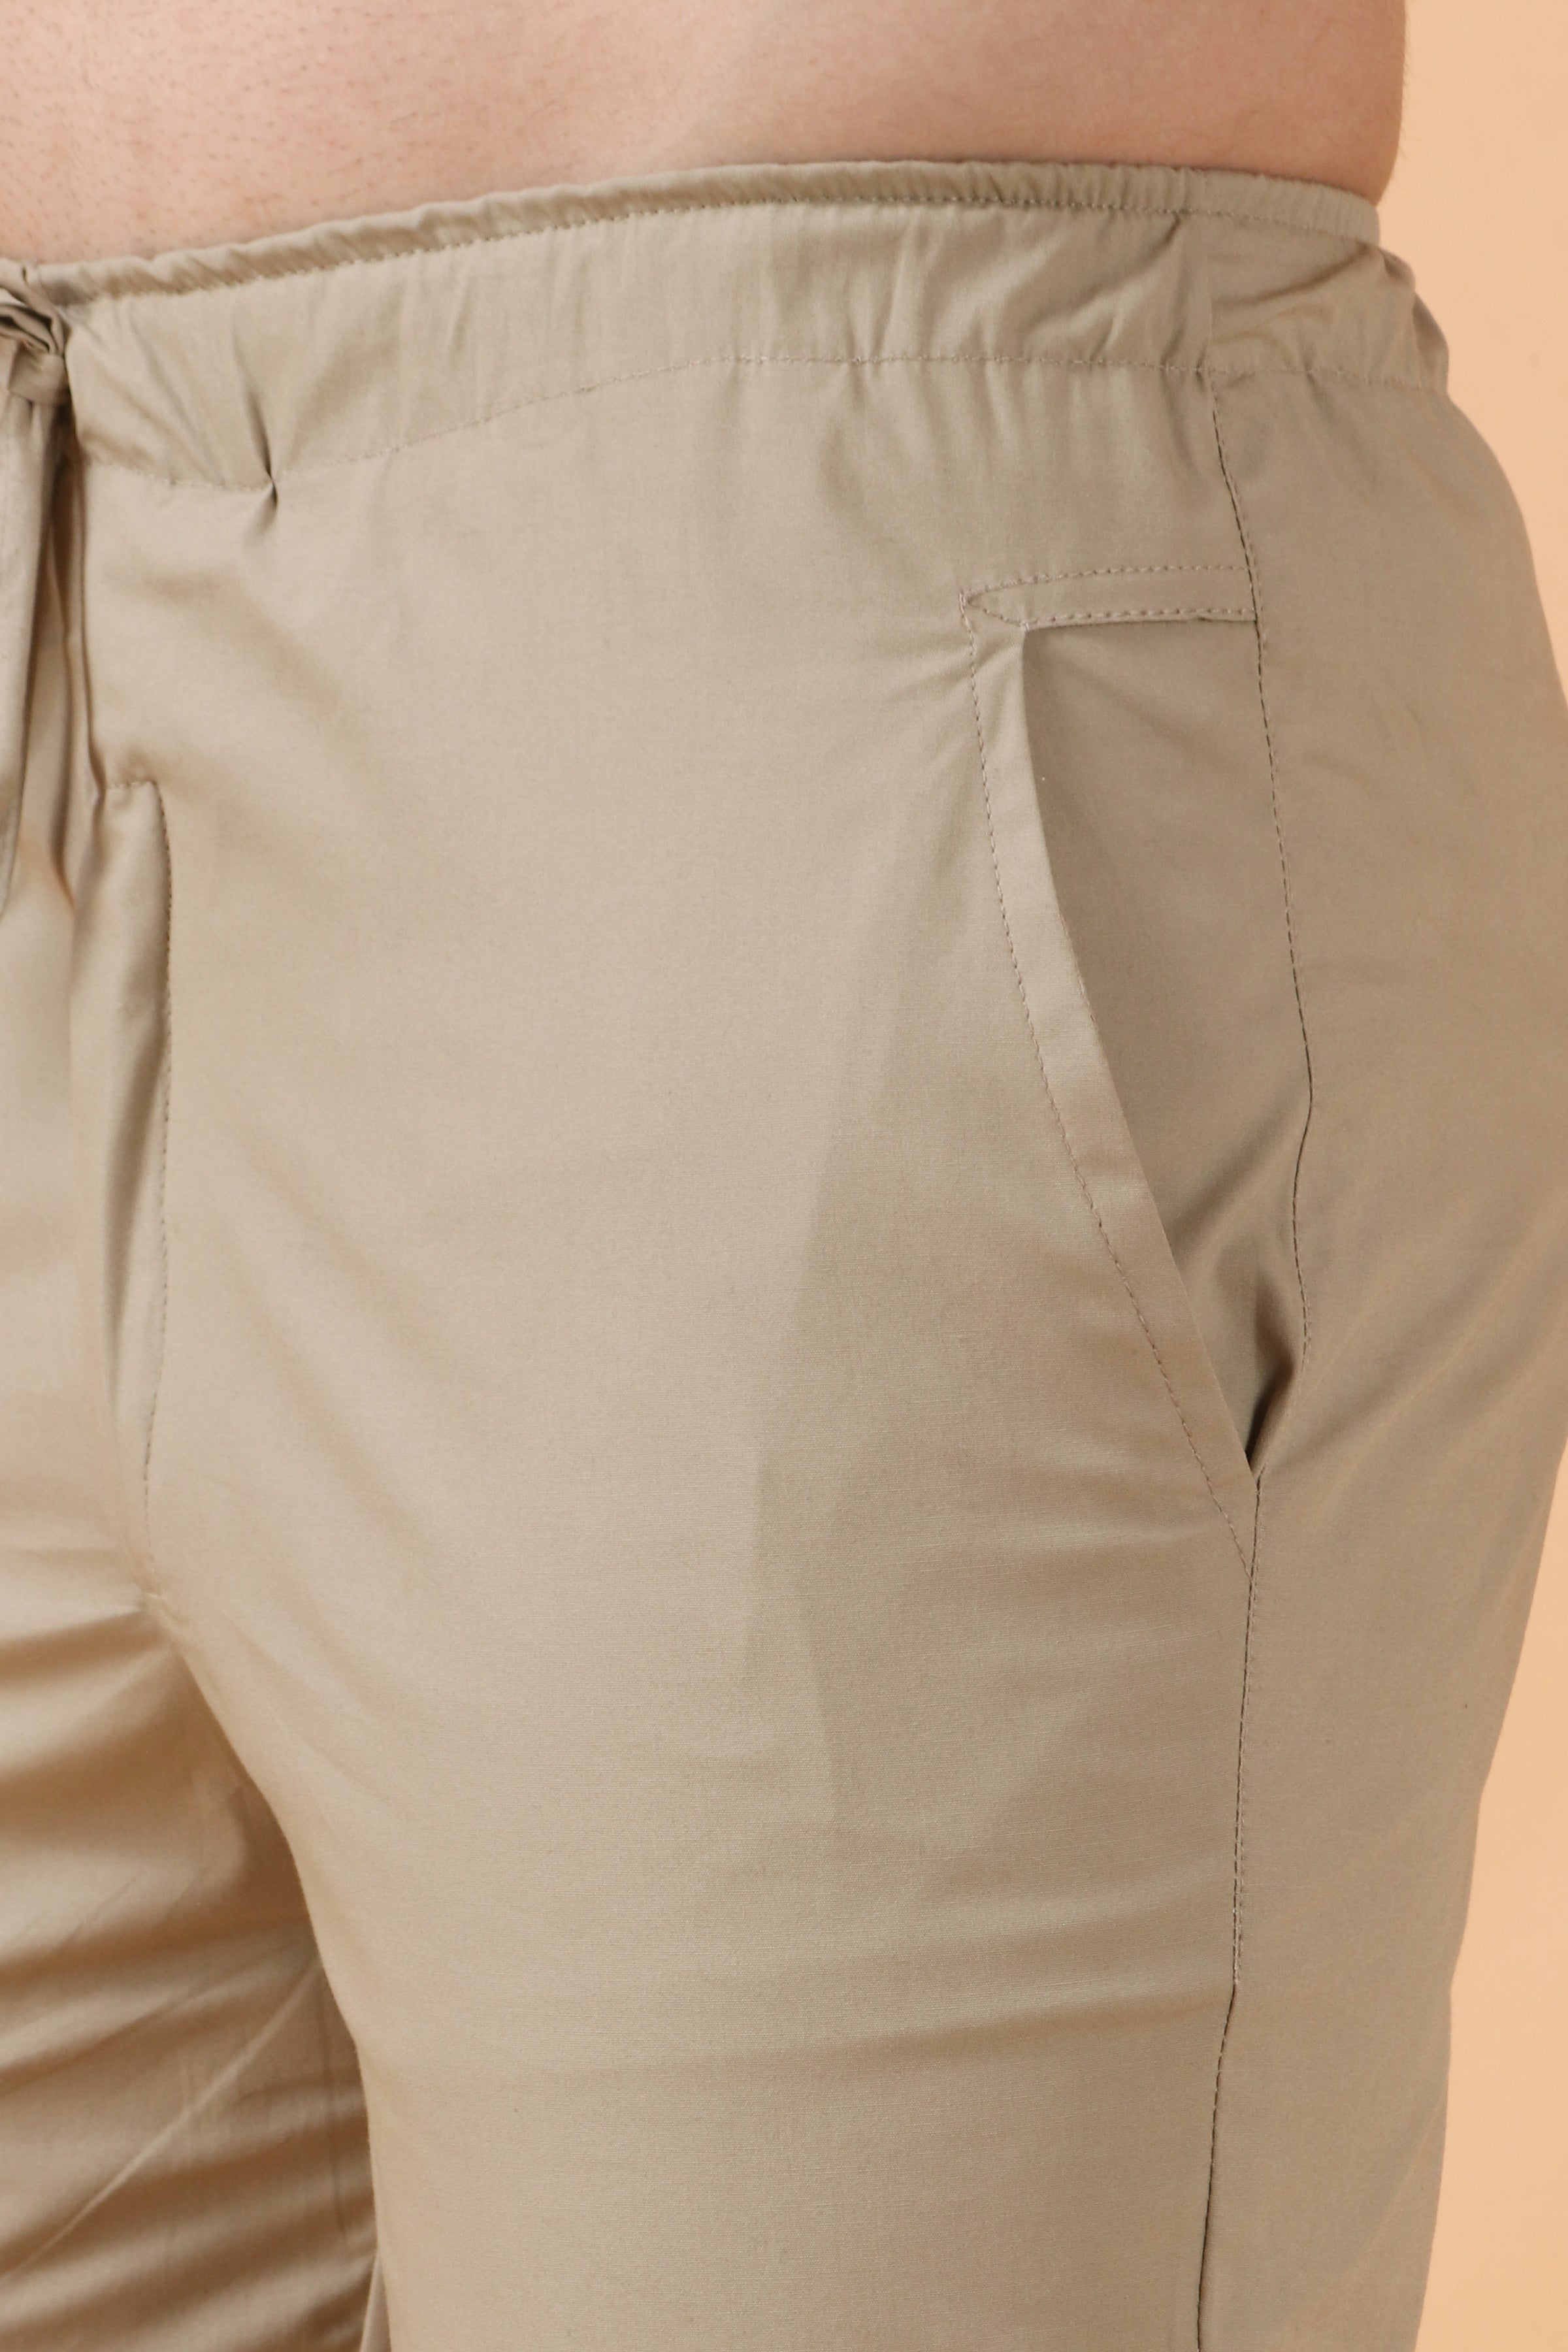 Men Cargo Trousers Pants SG300  Grey